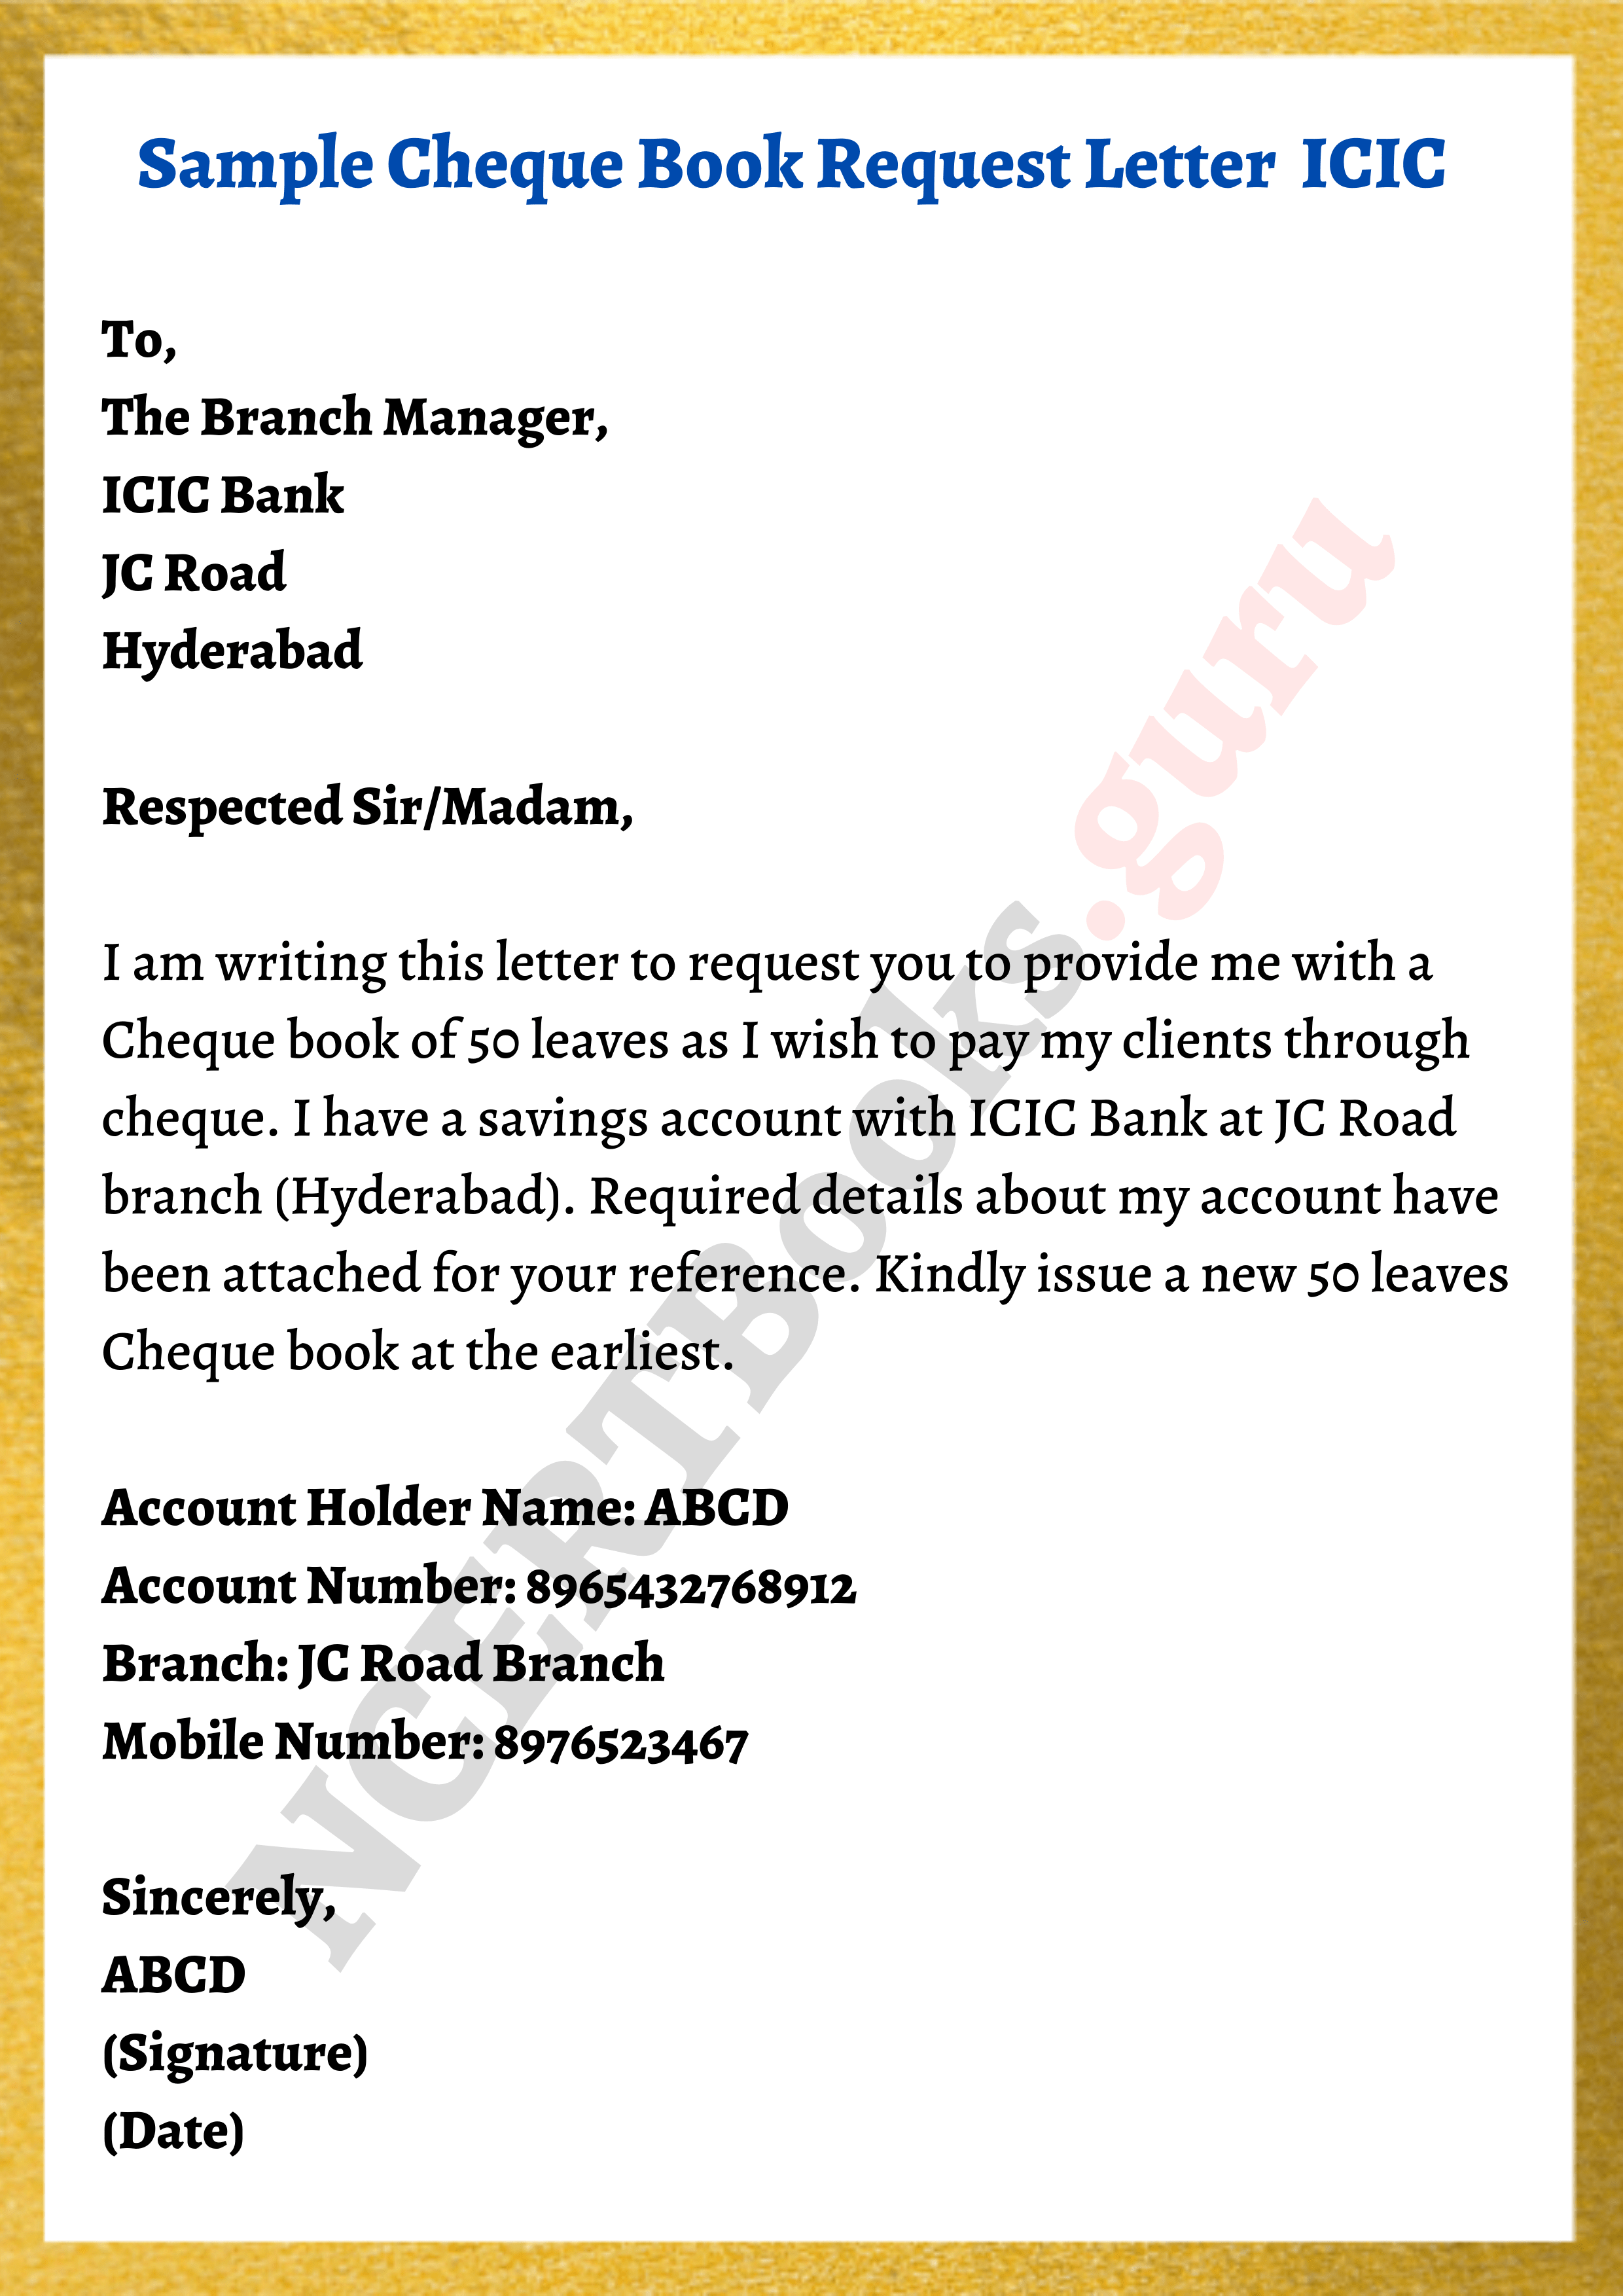 won-t-ban-cheque-books-says-finmin-oneindia-news